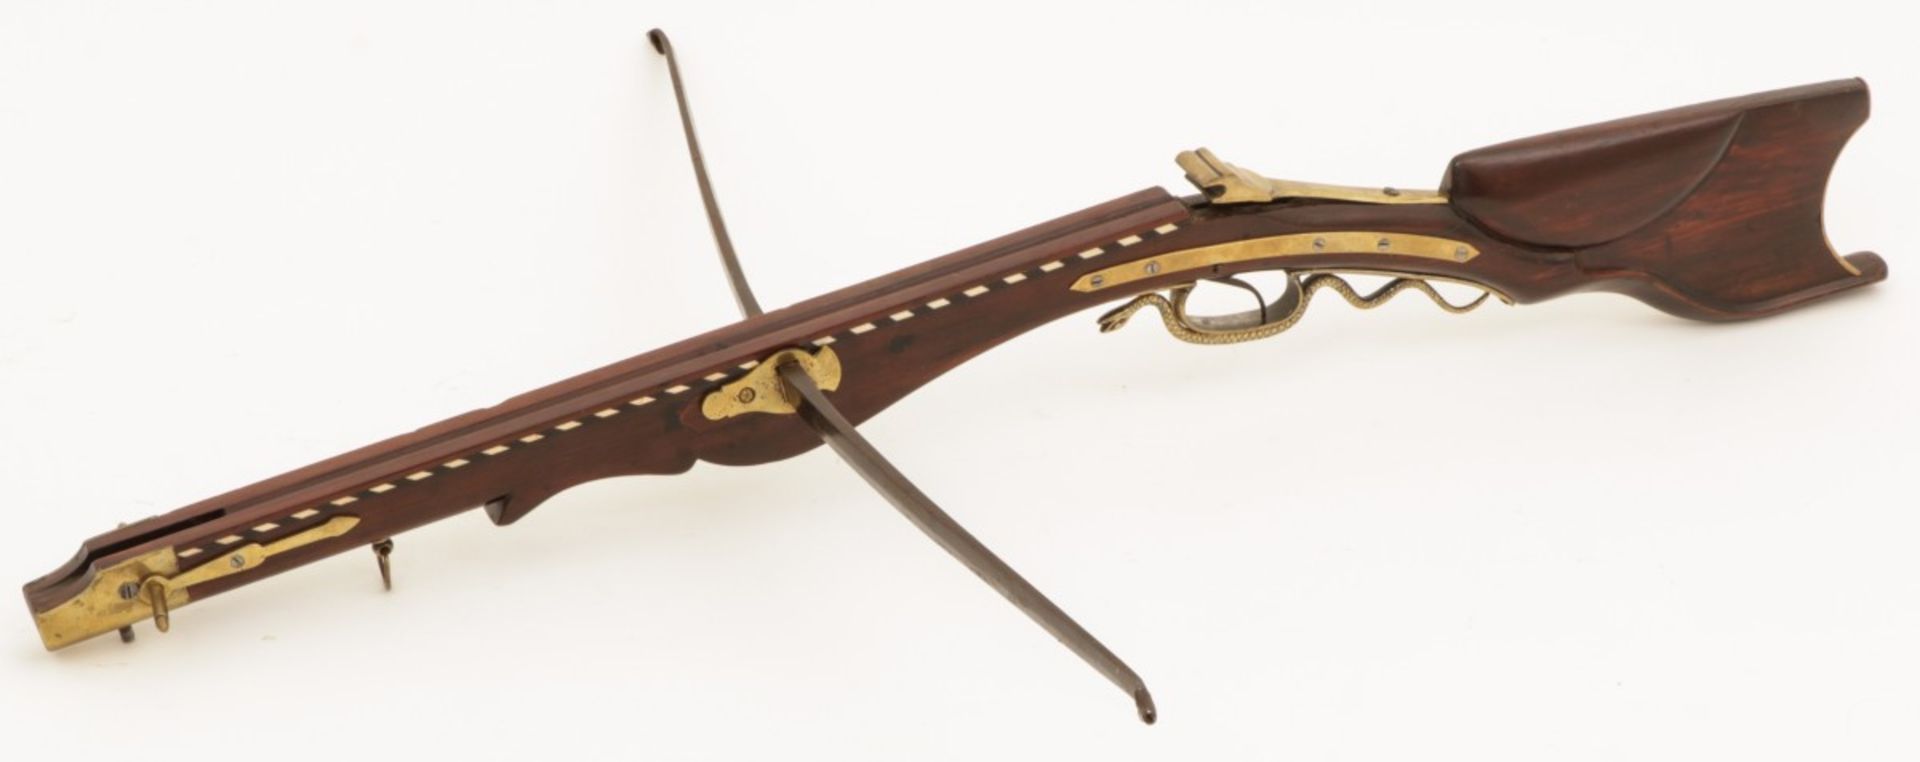 A nutwood/ brass crossbow, England, 19th century.